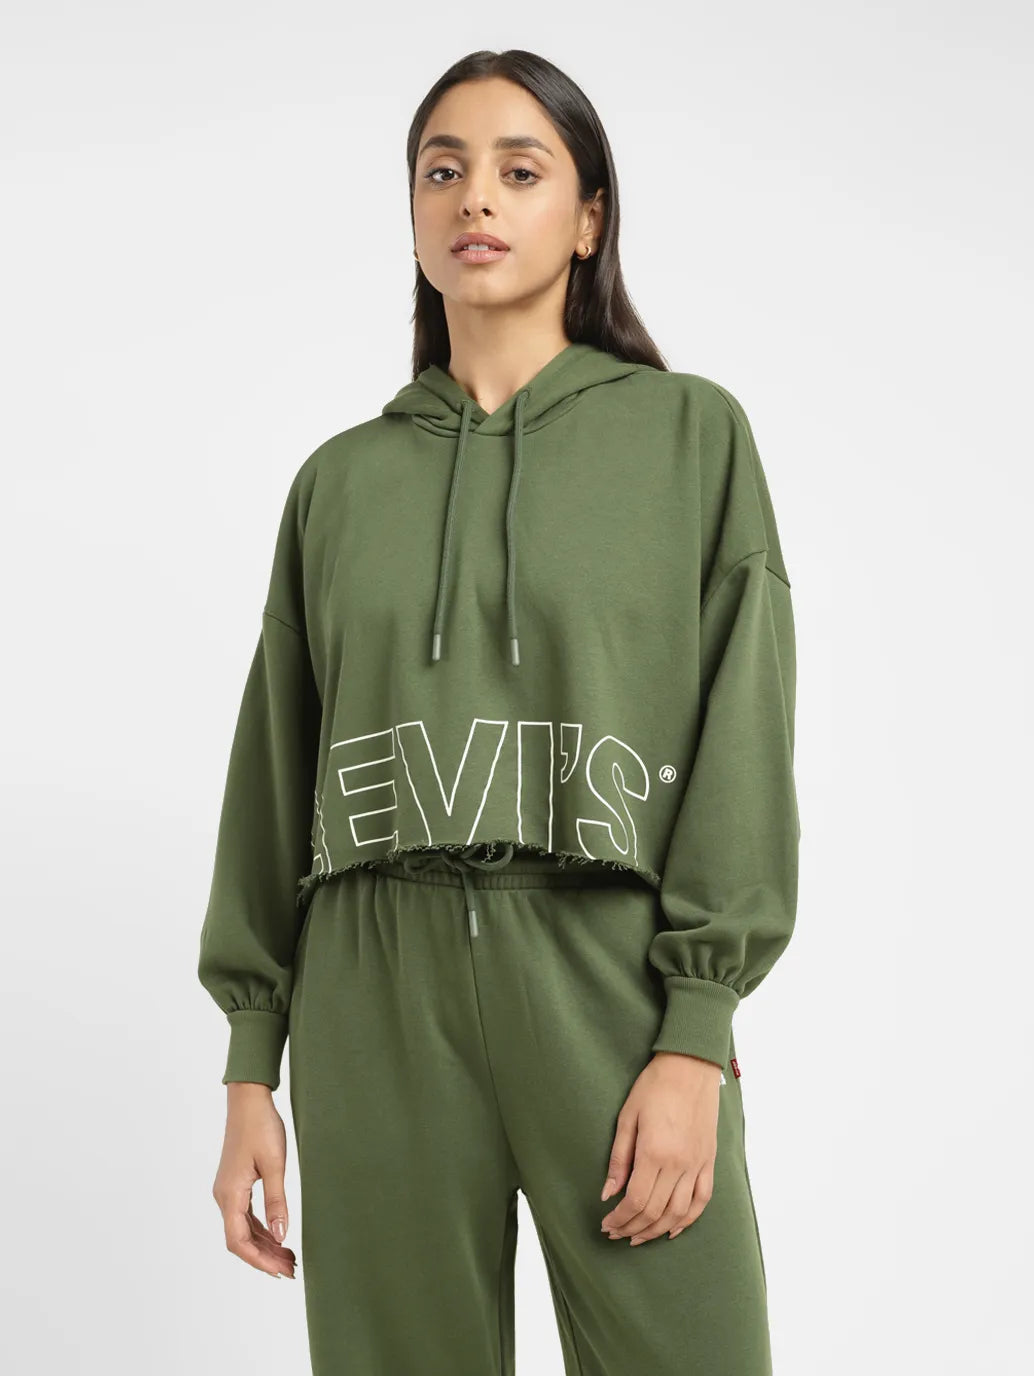 Levis Womens Sweatshirt Crew Neck Long Sleeves Graphic Print Green